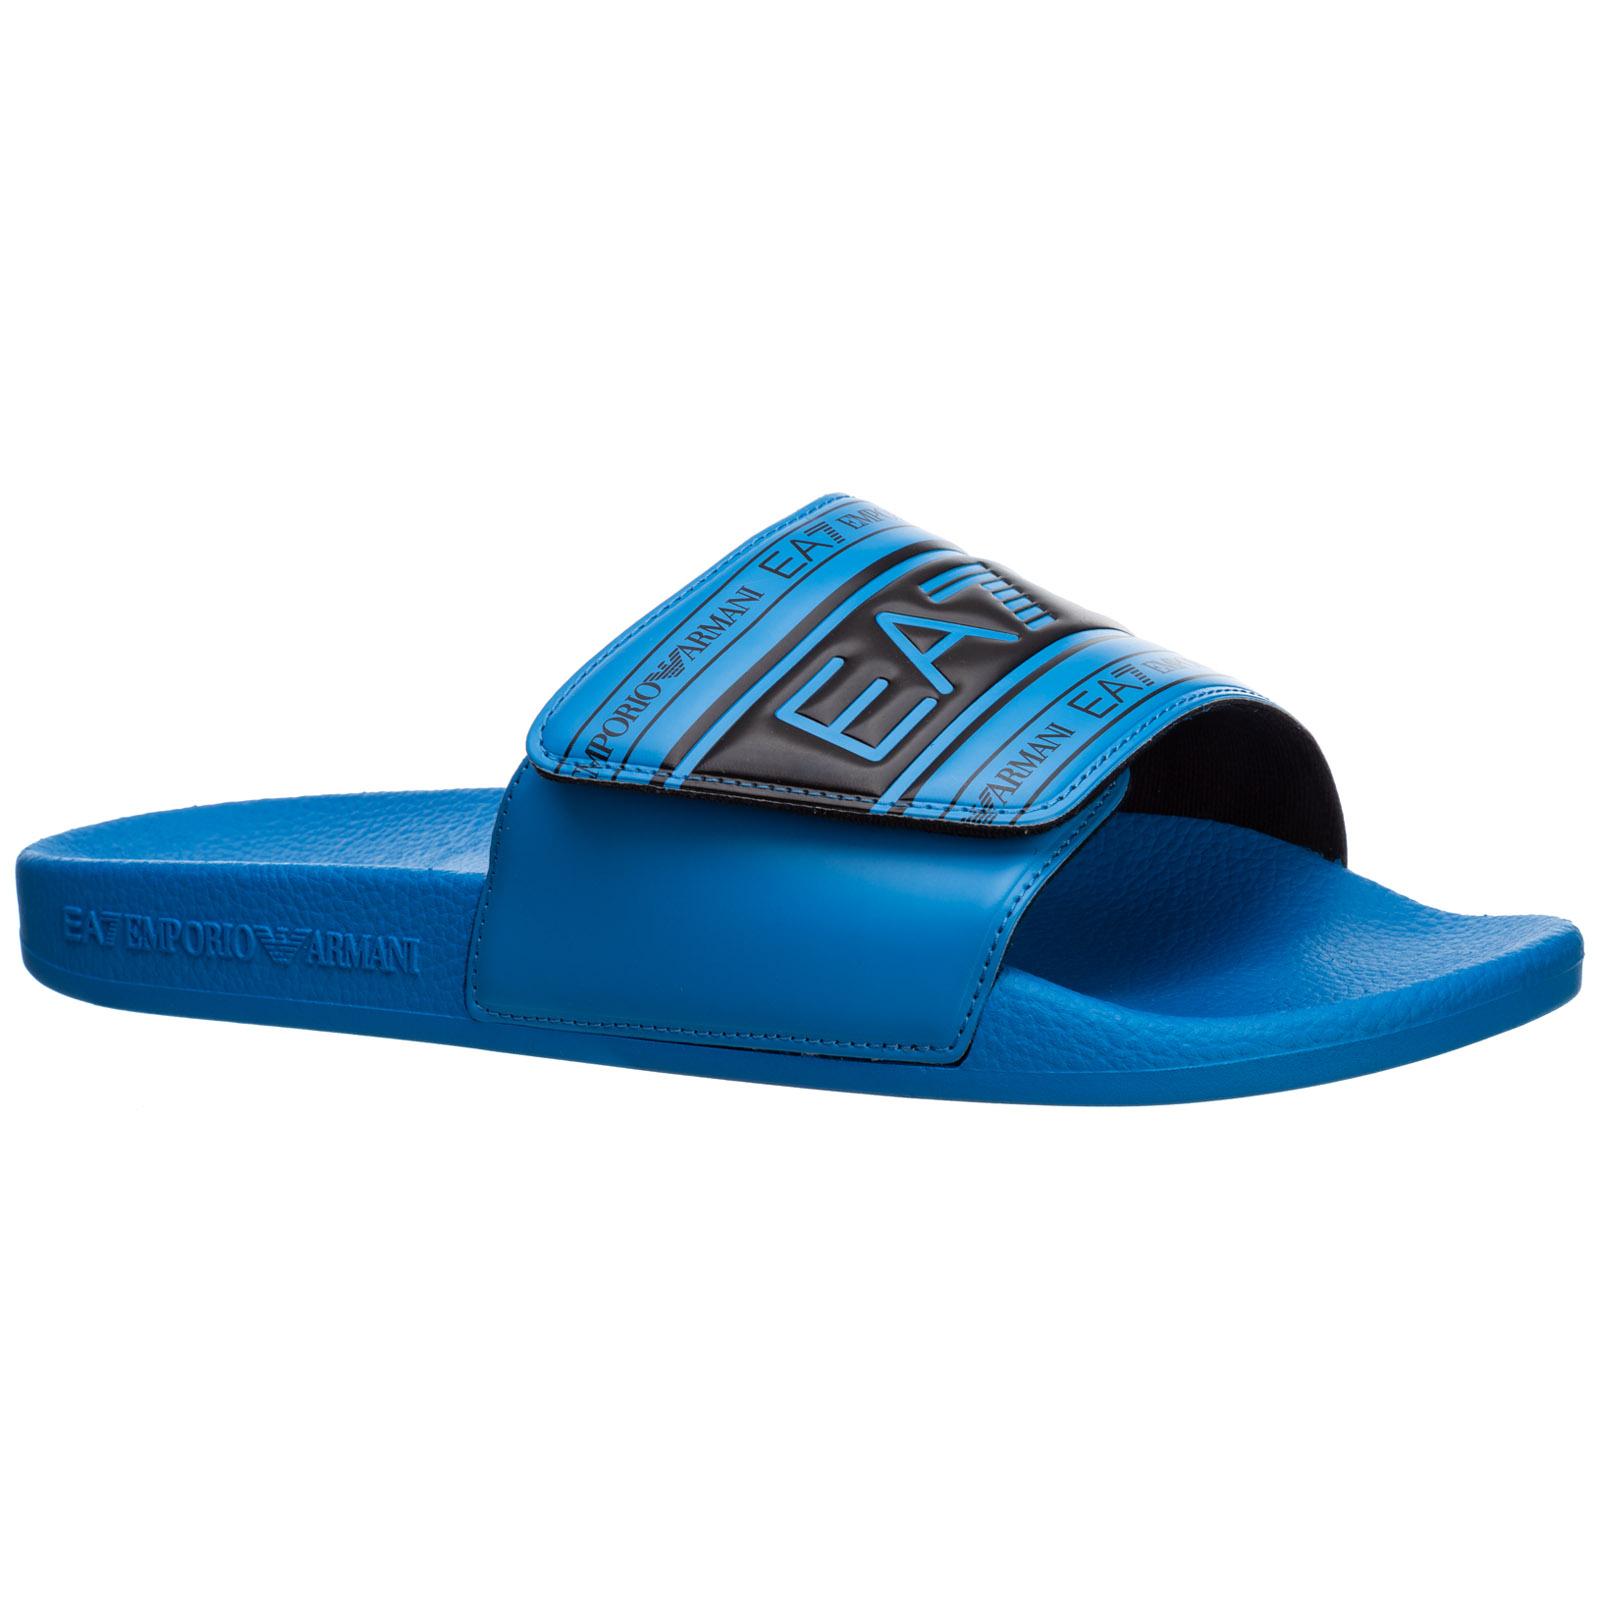 EA7 Men's Slippers Sandals in Blue for Men - Lyst